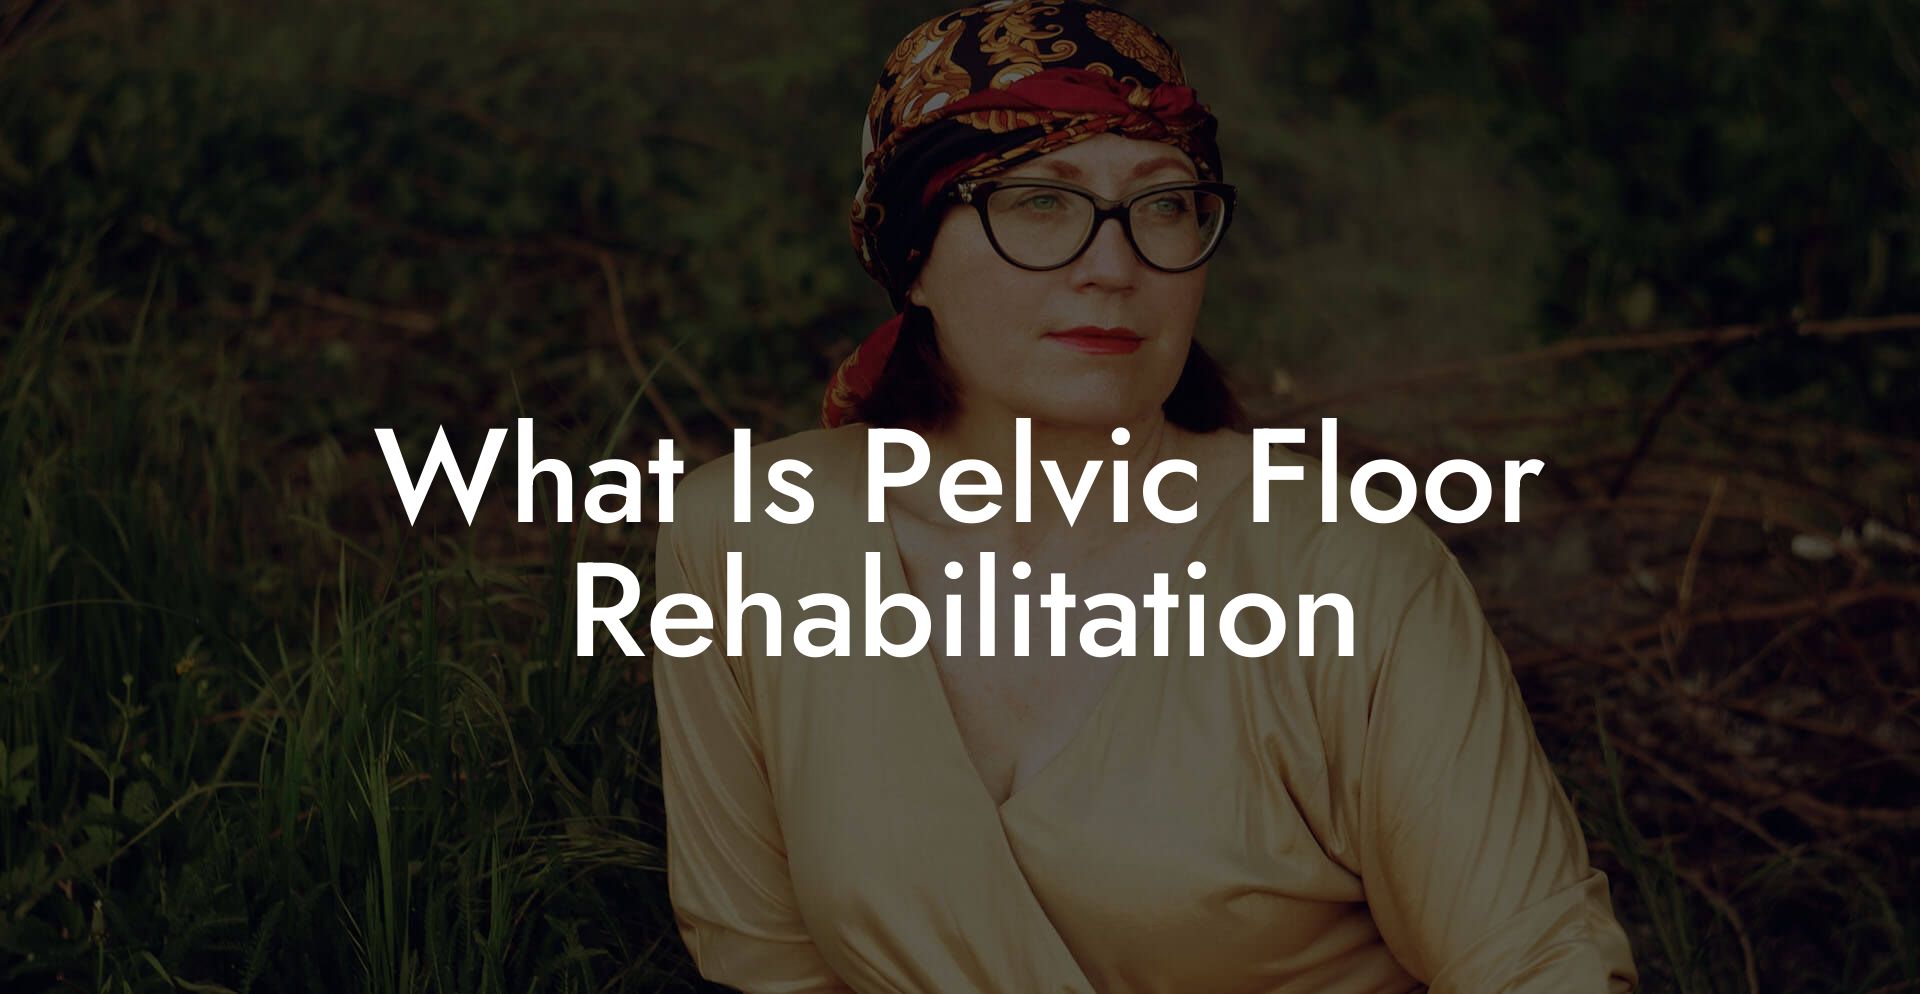 What Is Pelvic Floor Rehabilitation?